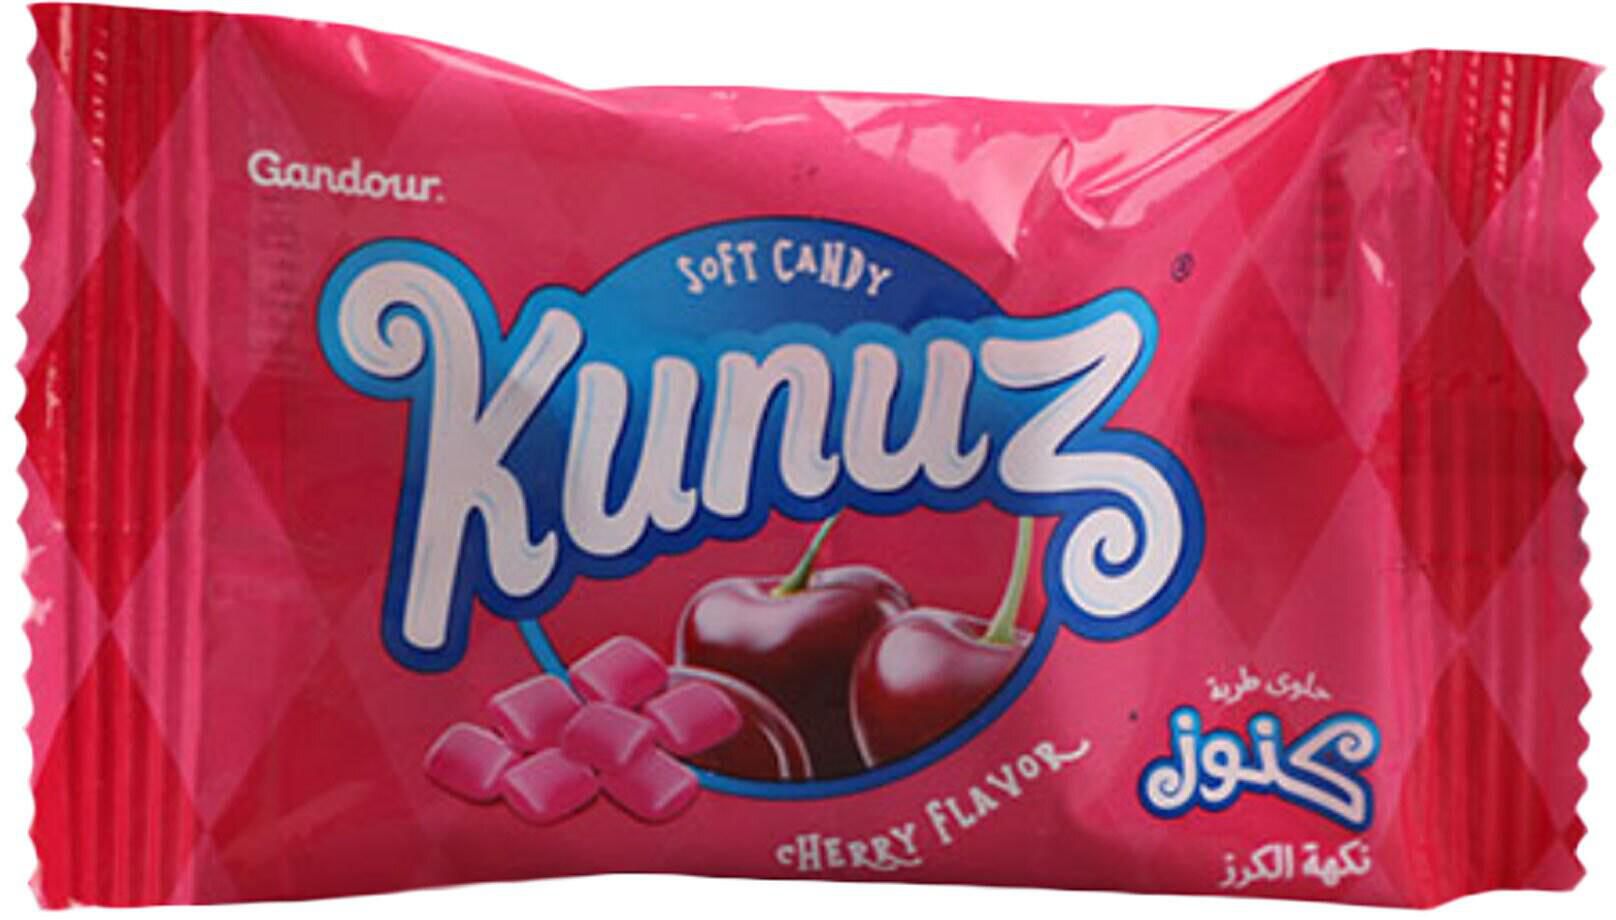 Gandour Kunuz cherry candy 16g